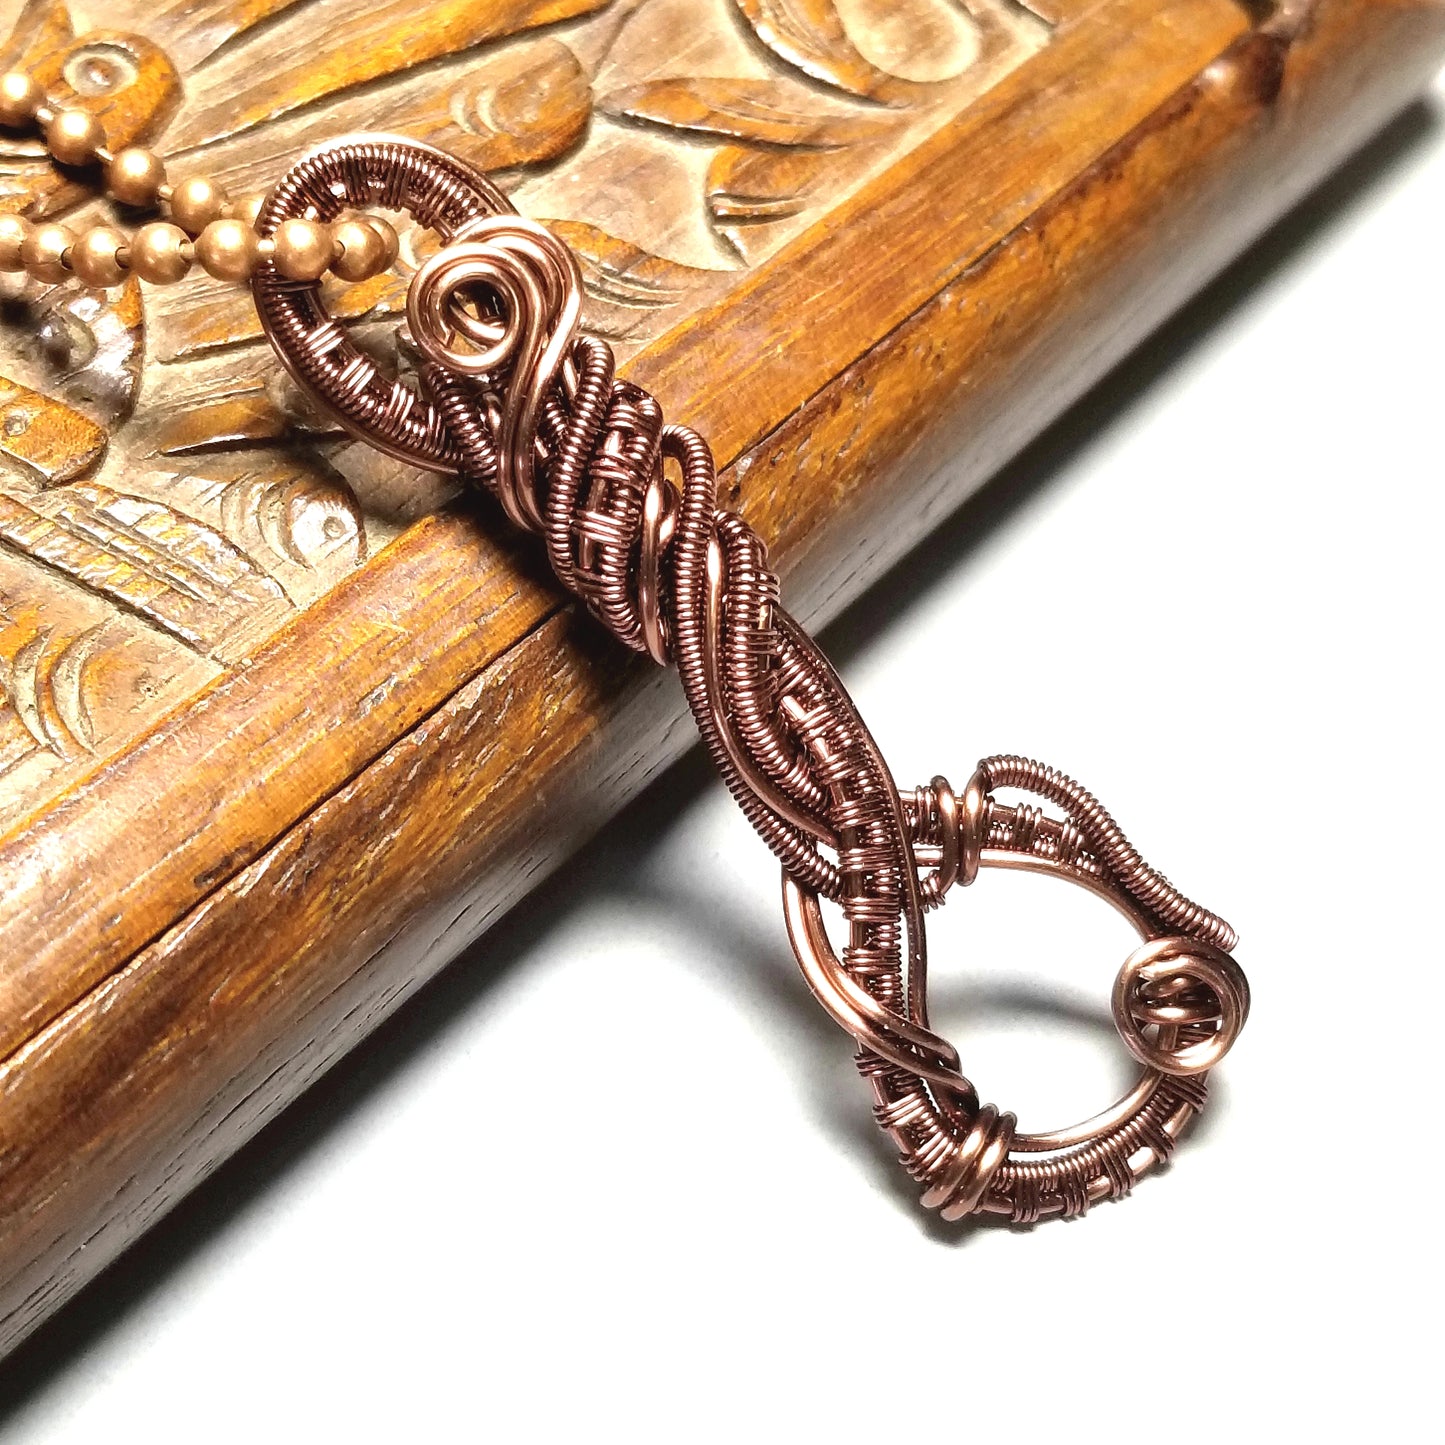 Copper Wire Wrapped Pendant, Wire Weave Jewelry